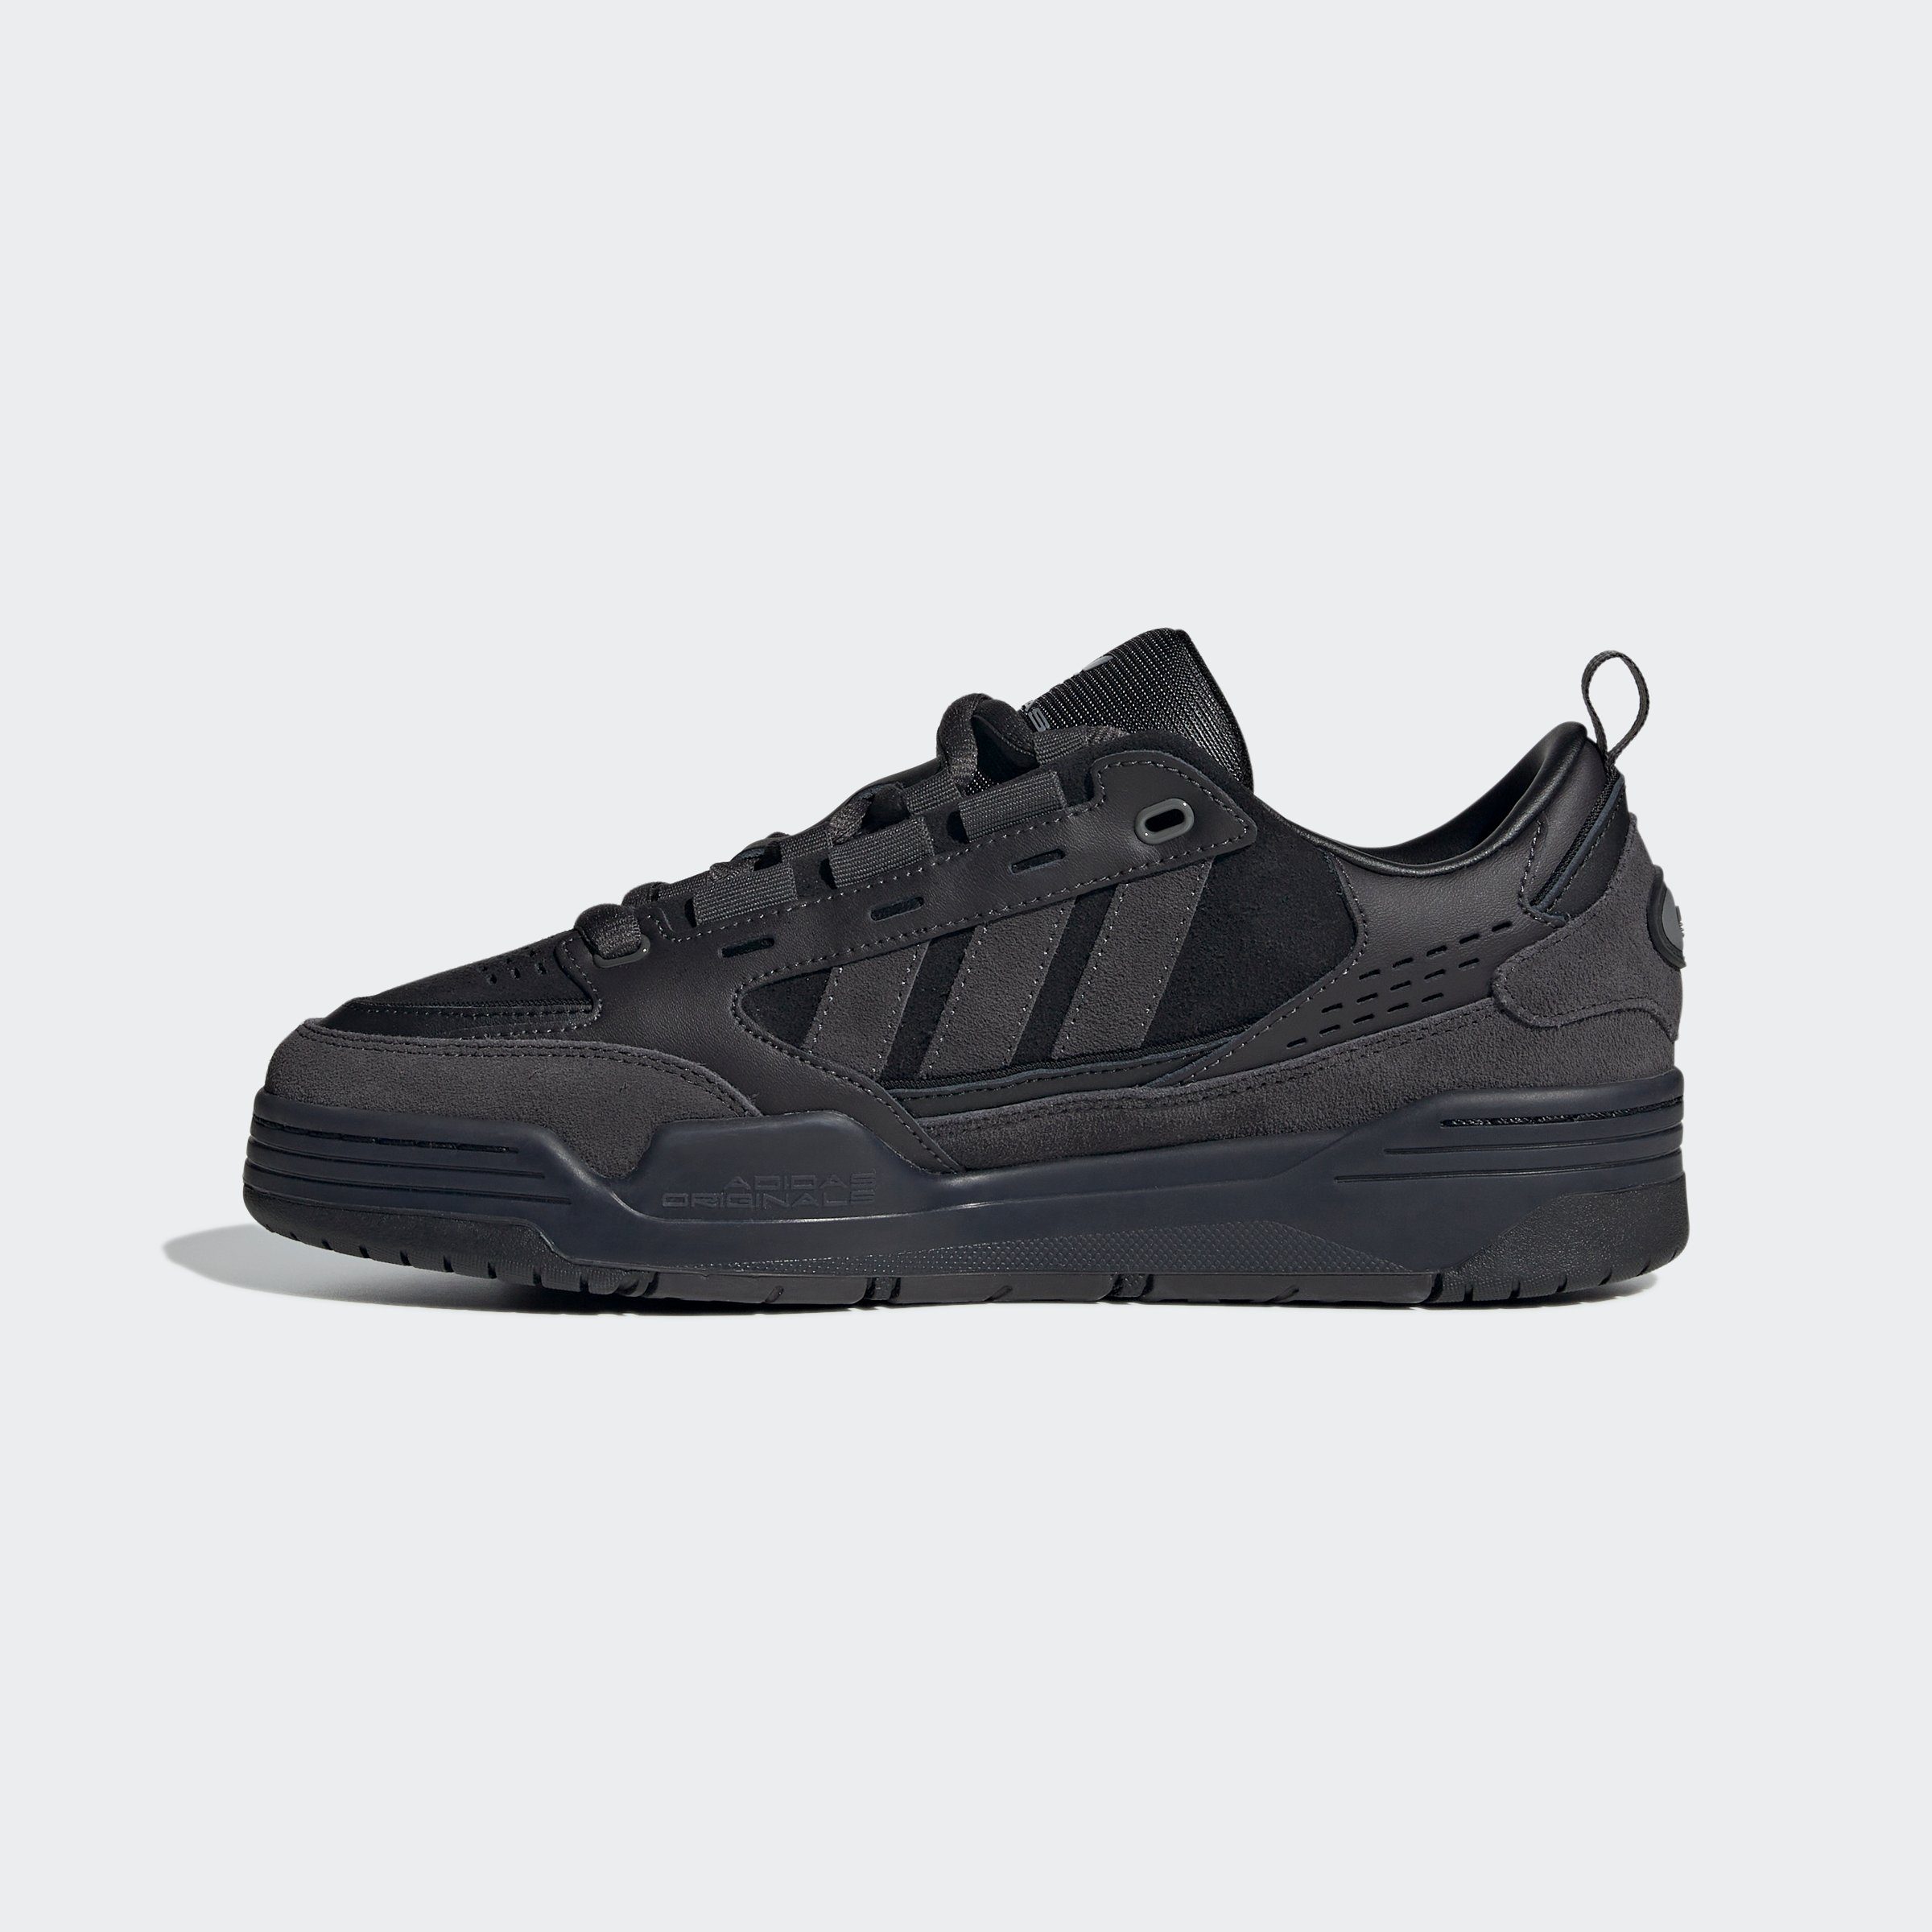 Originals Utility Black / ADI2000 Core Black Black Sneaker / Utility adidas